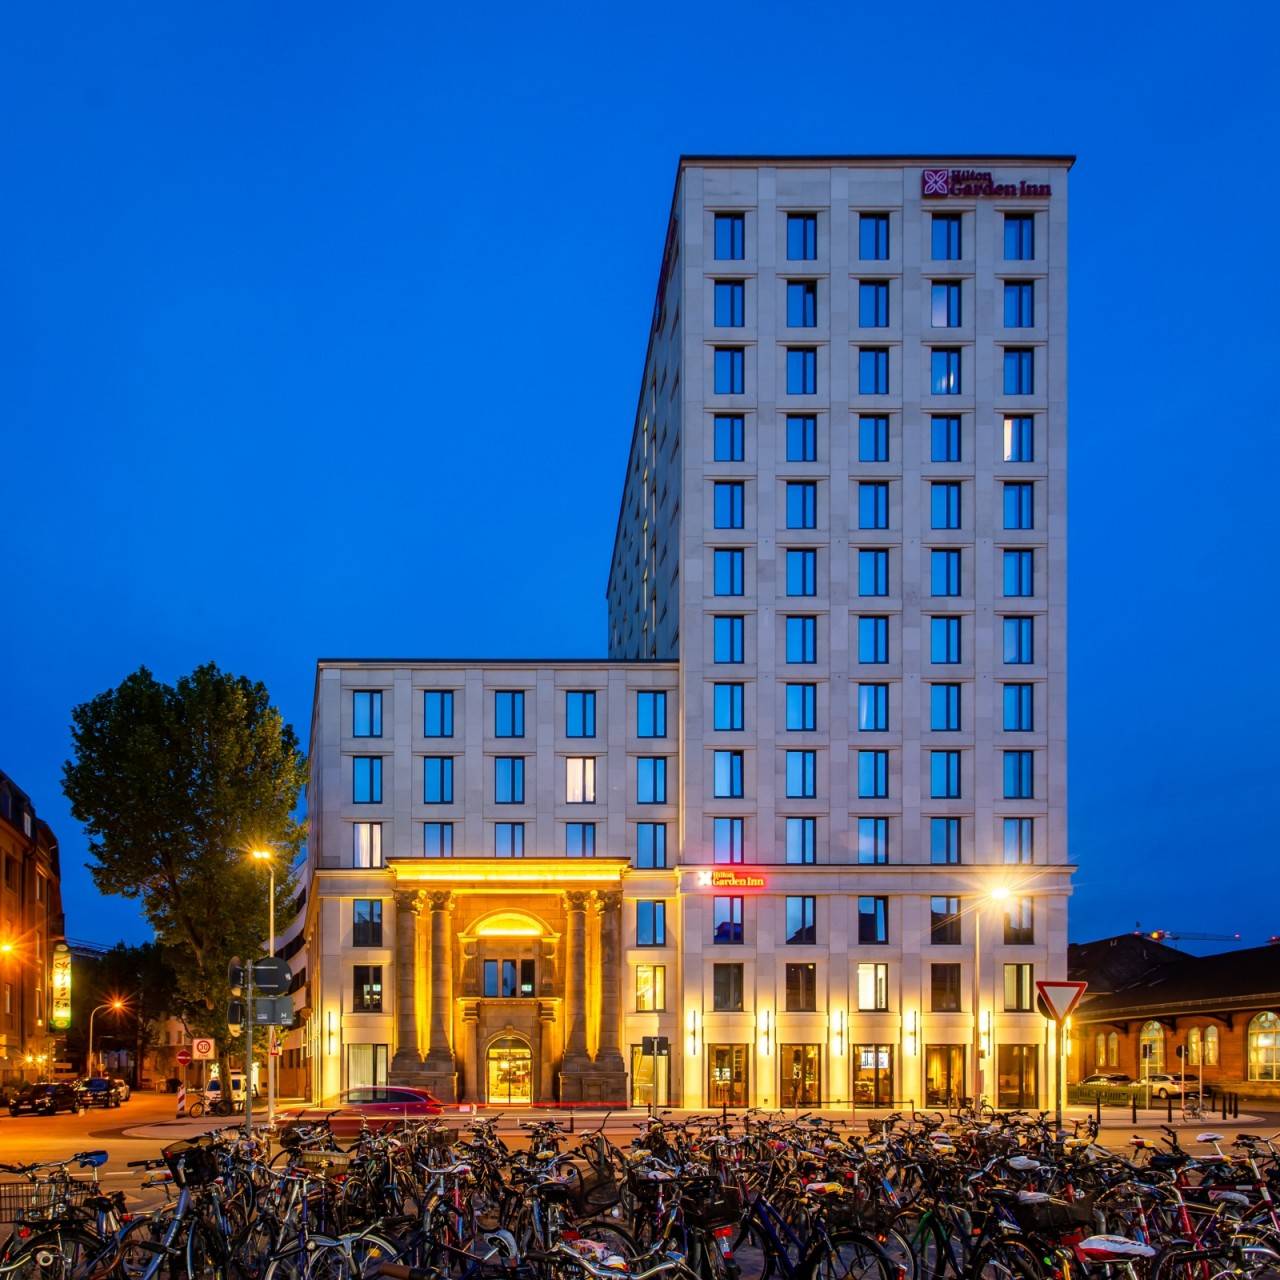 Hilton Garden Inn Mannheim 4 Hrs Star Hotel In Mannheim Baden